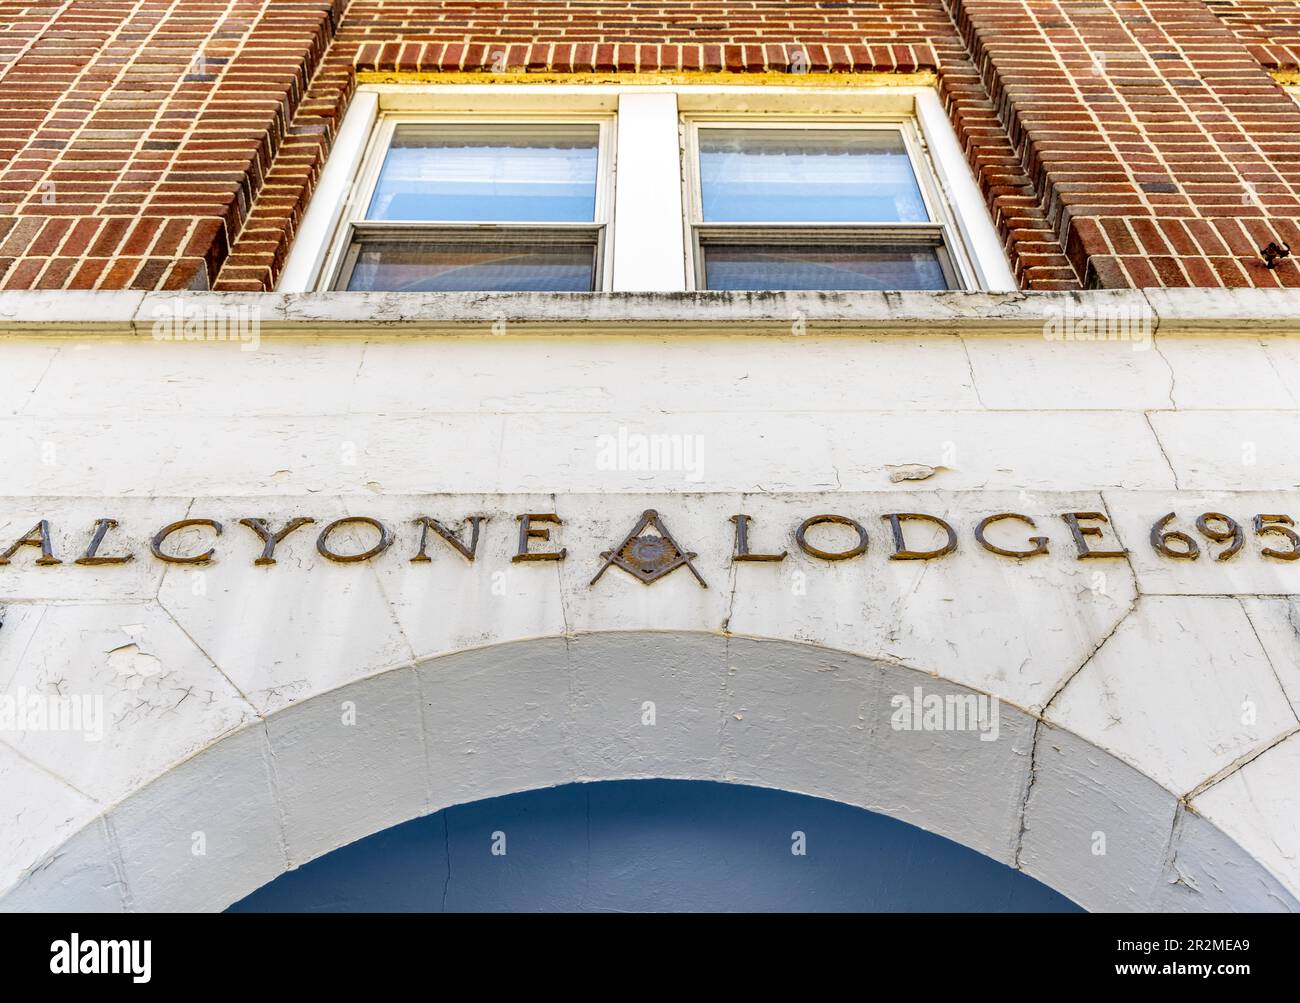 Alcyone lodge 695 in Northport, Long Island, NY Stock Photo